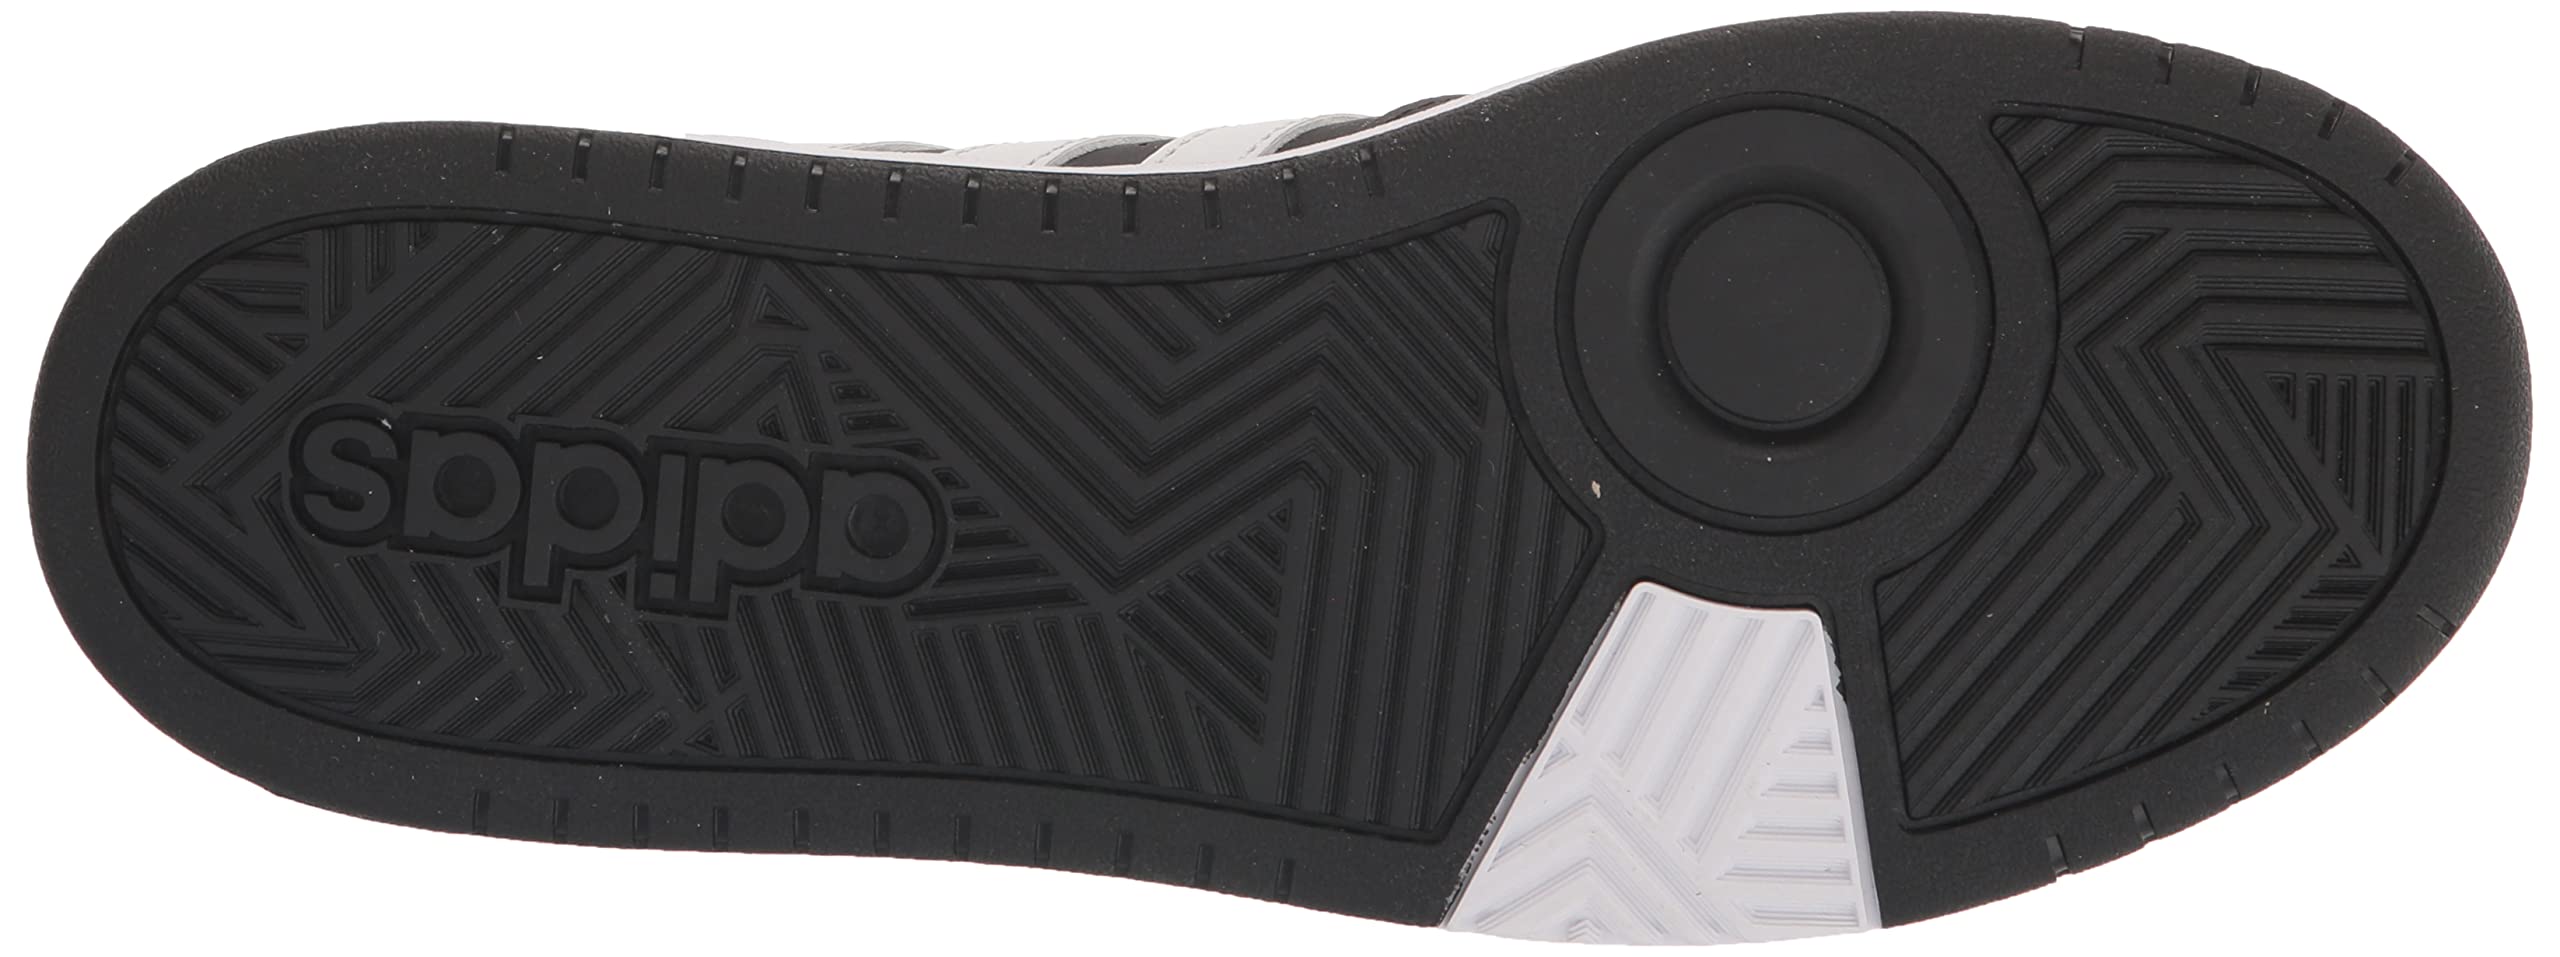 adidas Unisex-Child Hoops 3.0 Mid Basketball Shoe